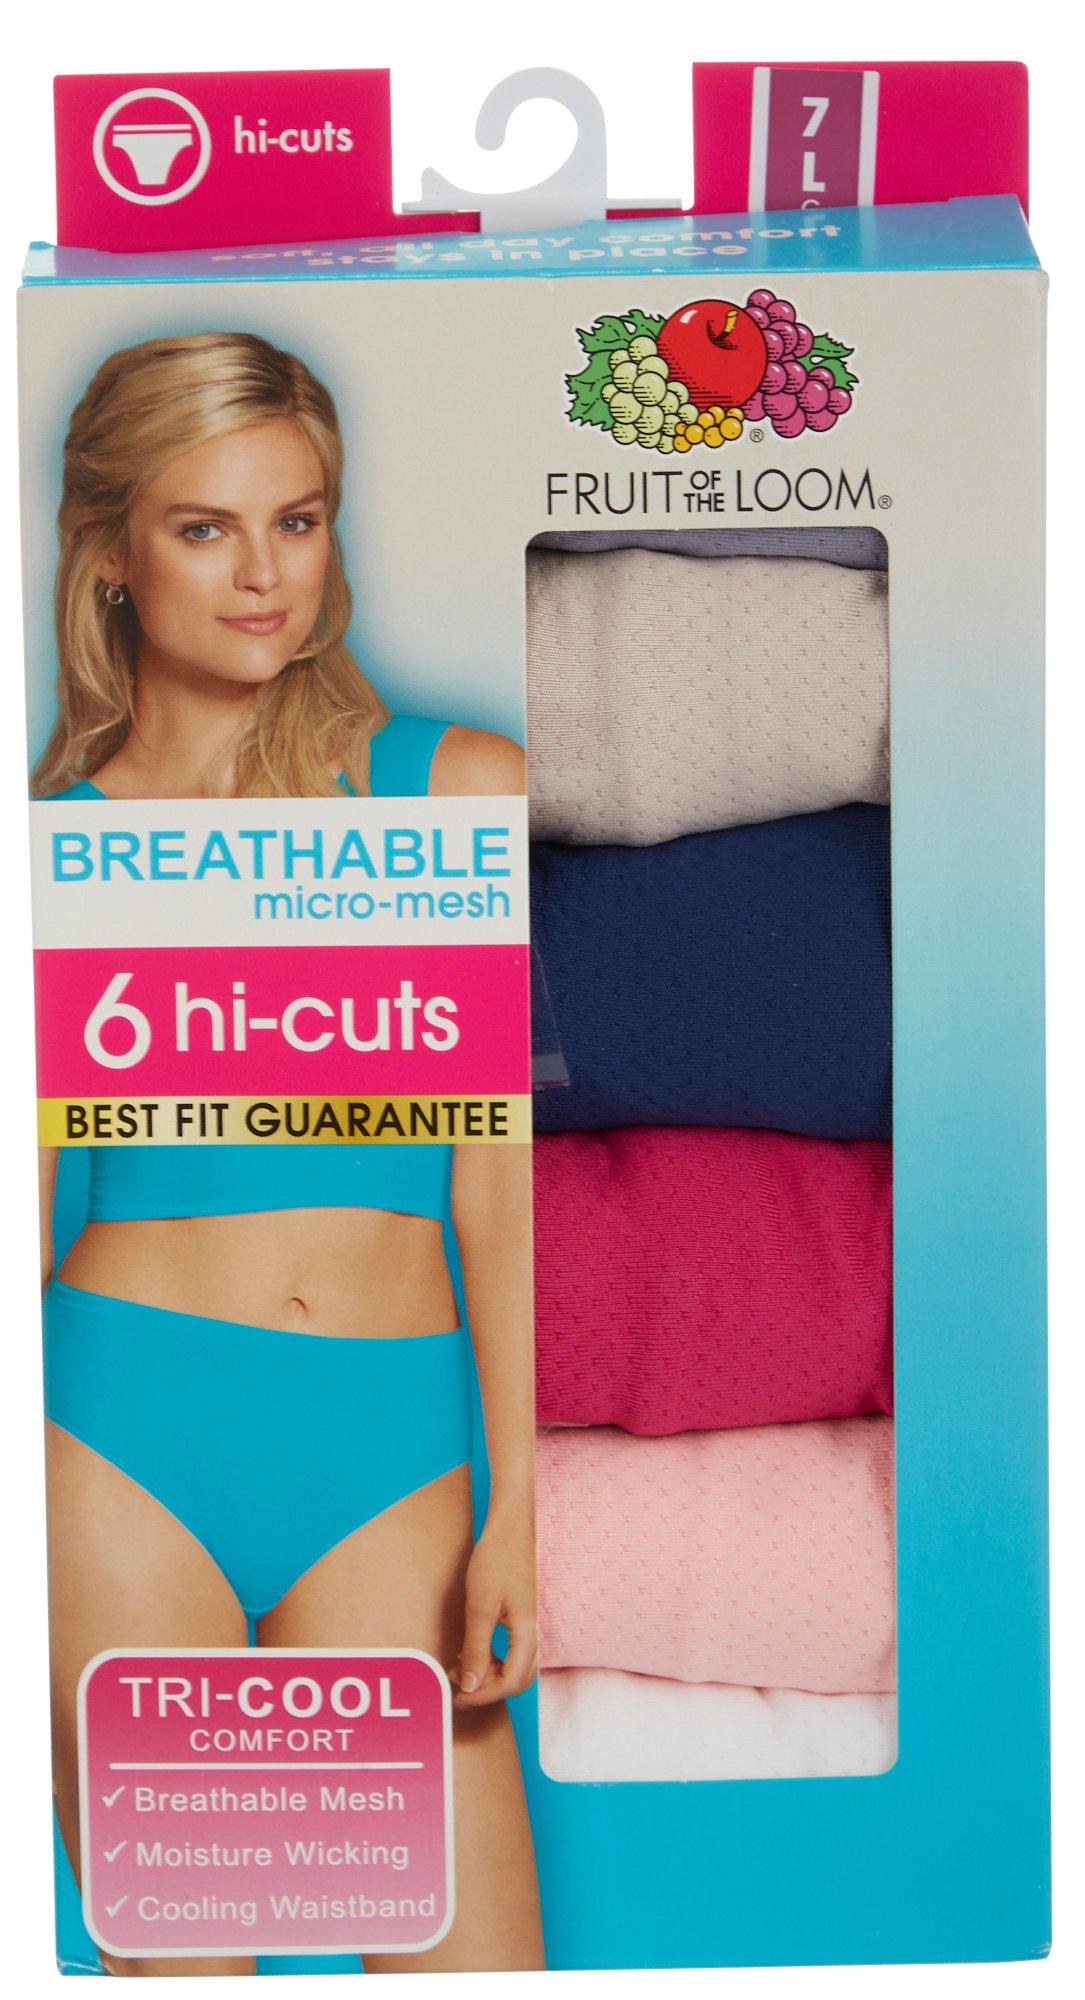 ELLEN TRACY Women's Hi Cut Brief Panties Breathable Seamless Underwear 4- Pack Mu